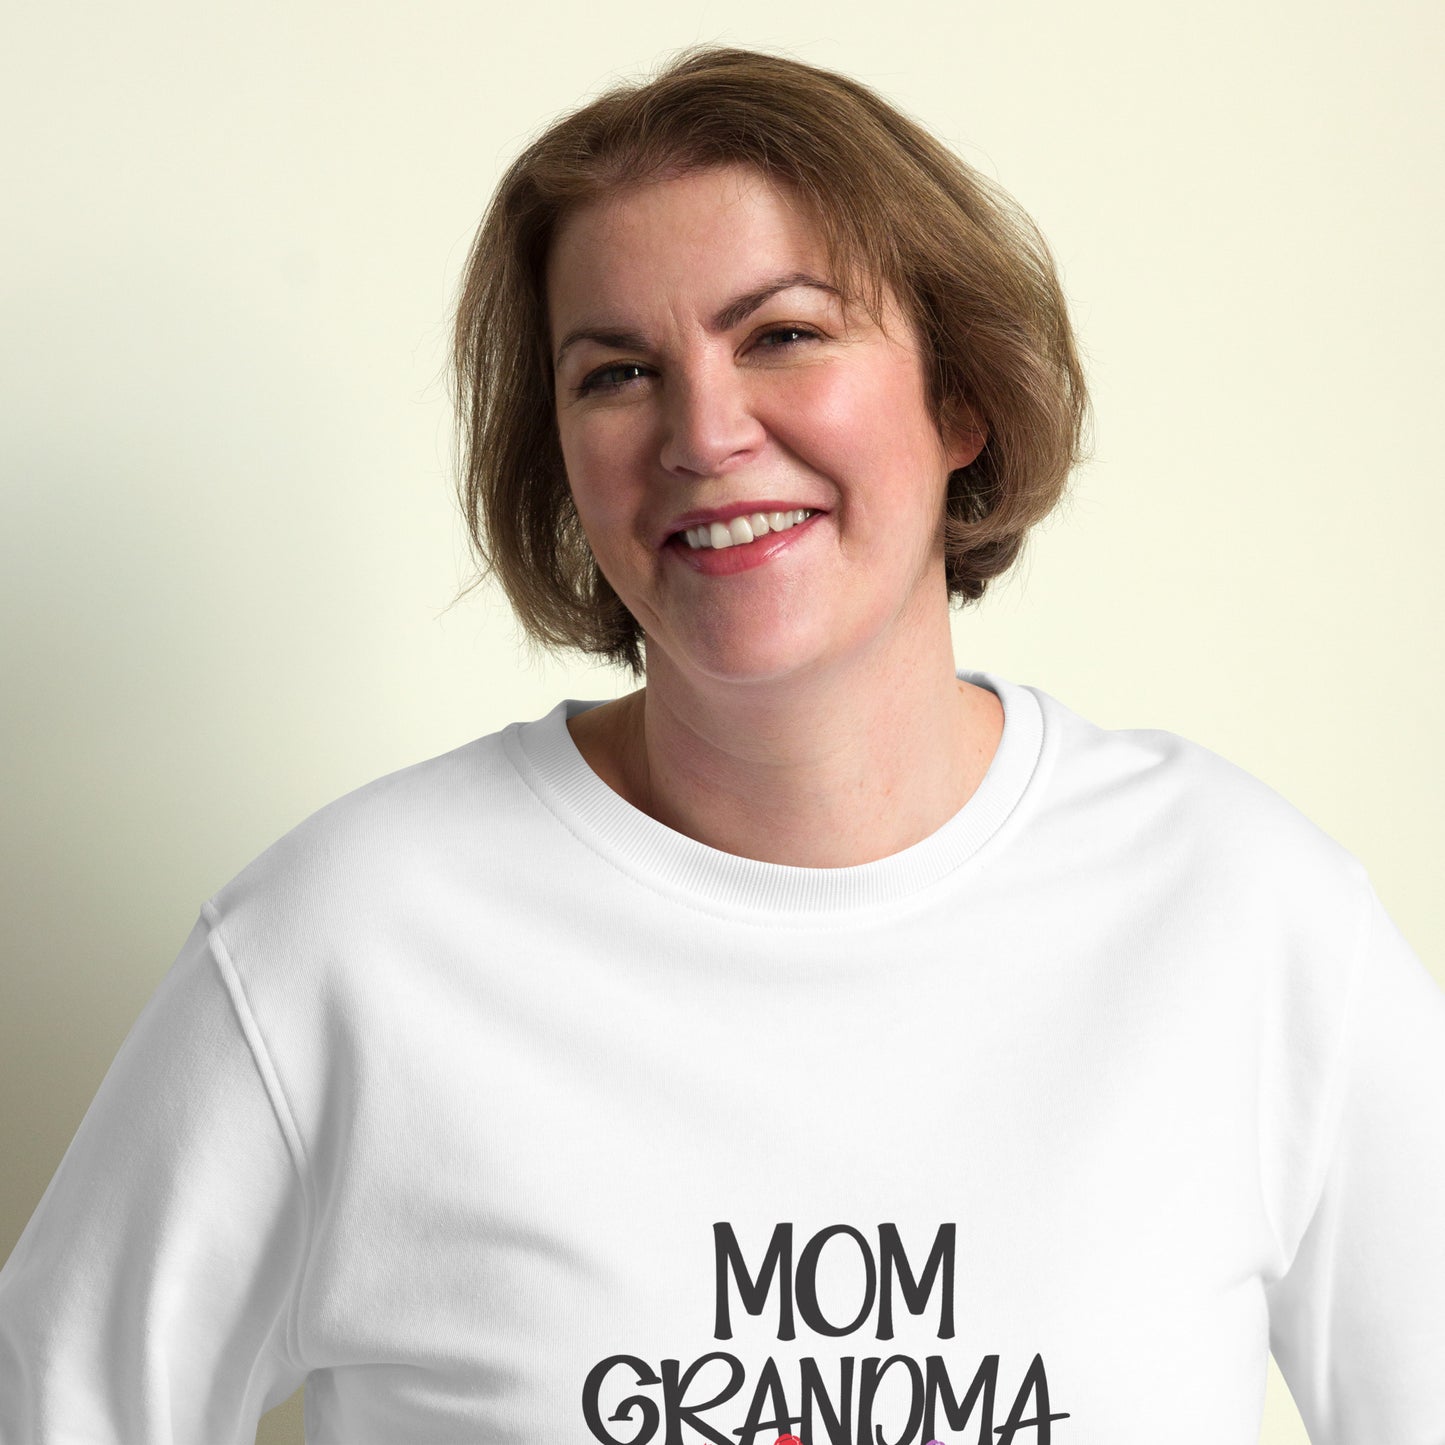 Organic Sweatshirt for Mom, Grandma, Great-Grandma